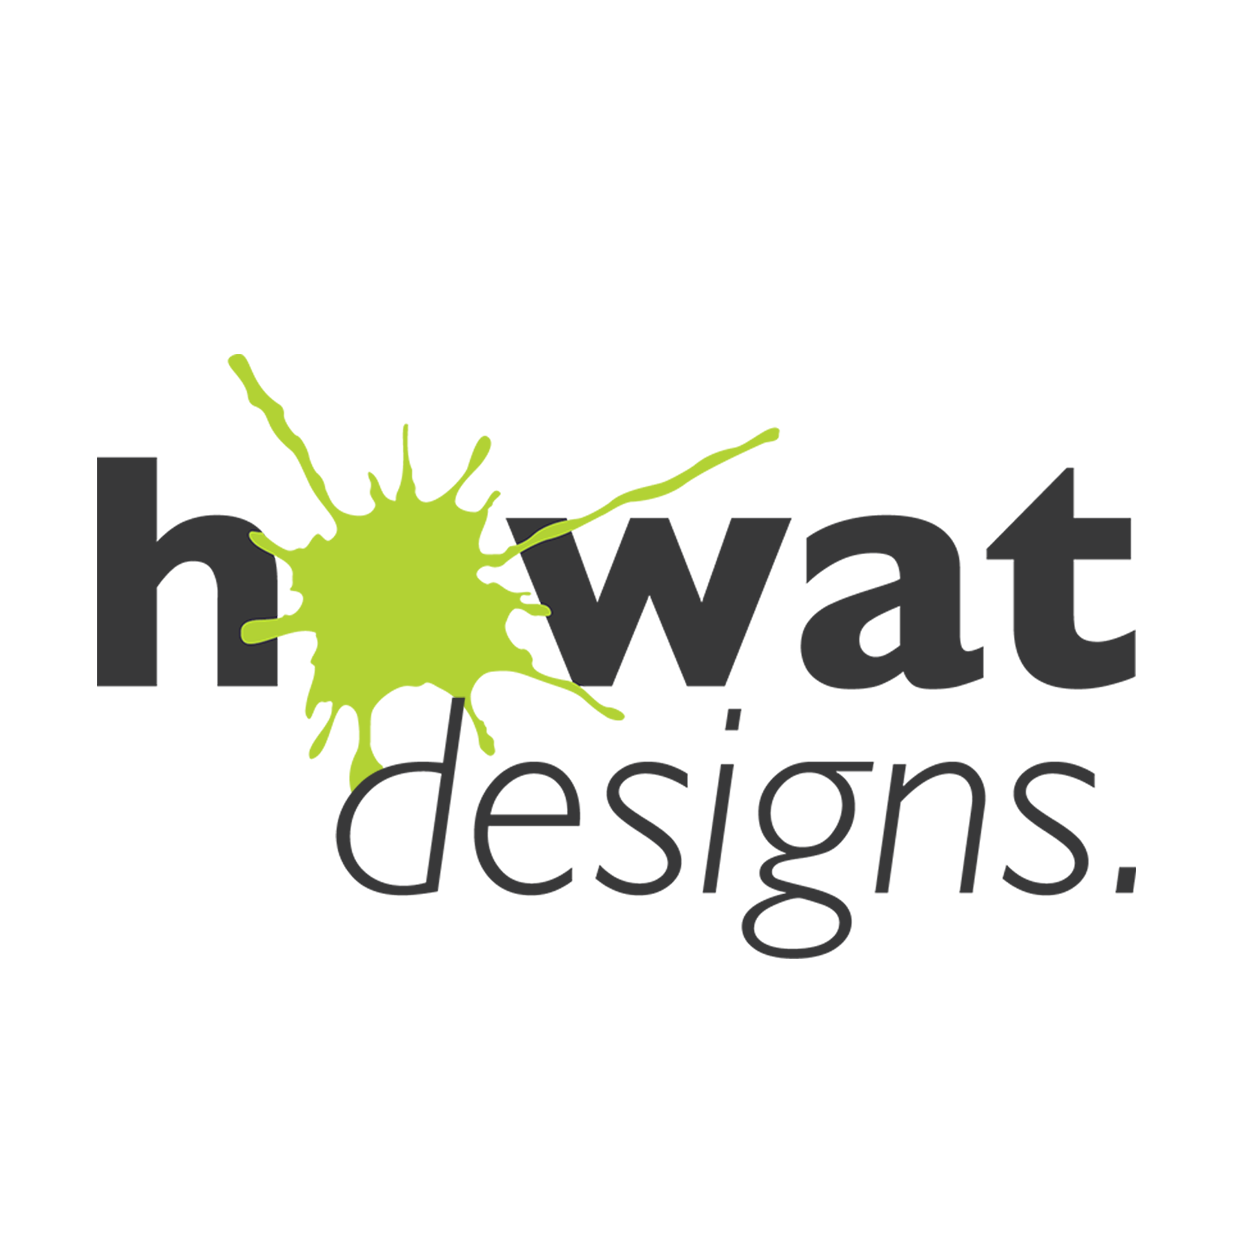 howatdesigns